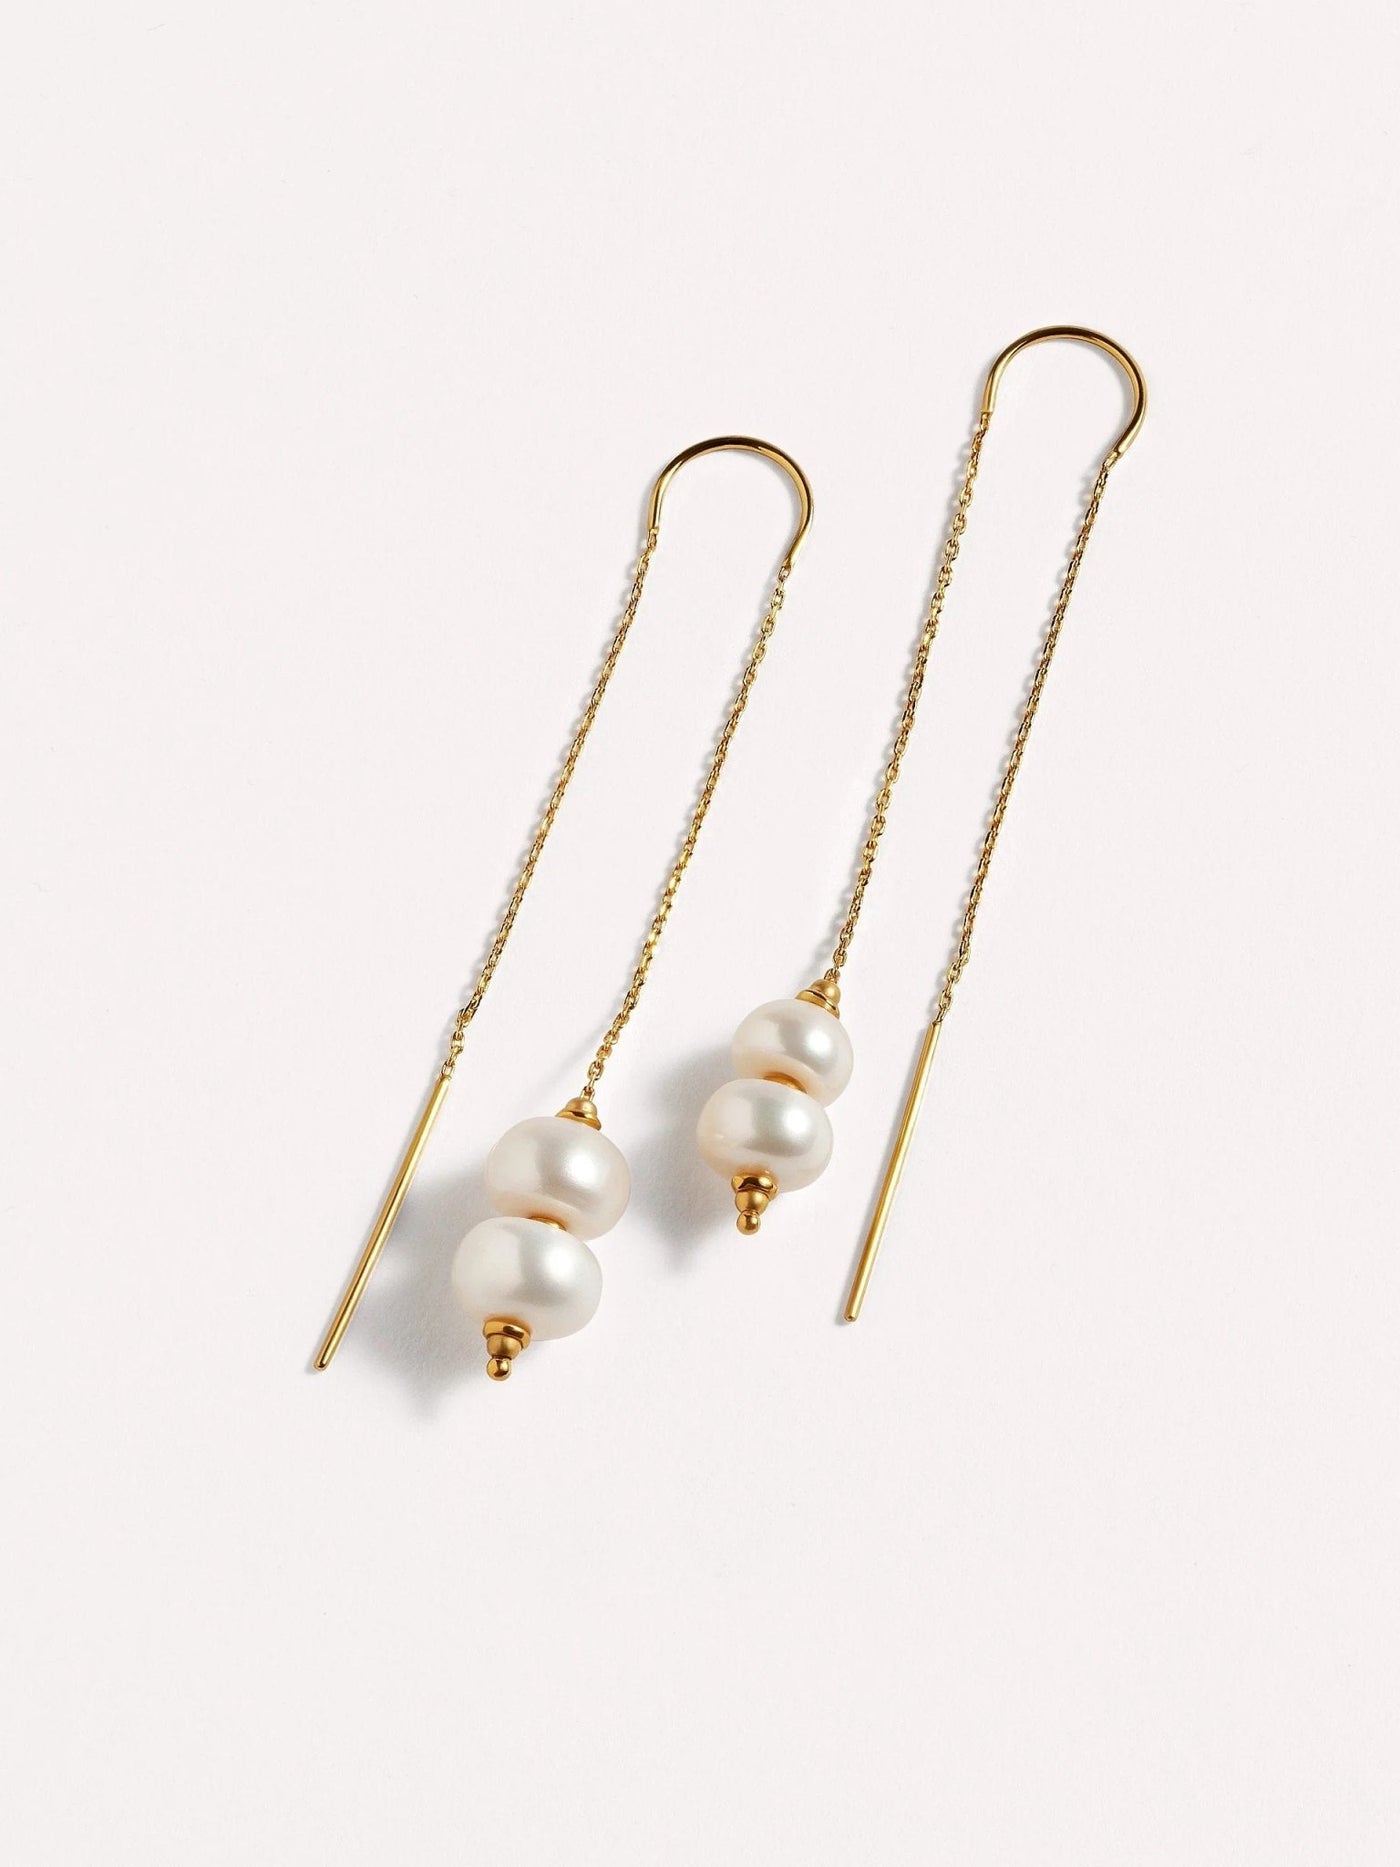 Hunita Pearl Threaders Earrings - Flat Buttom Pearlalt earringsbest gift for herLunai Jewelry